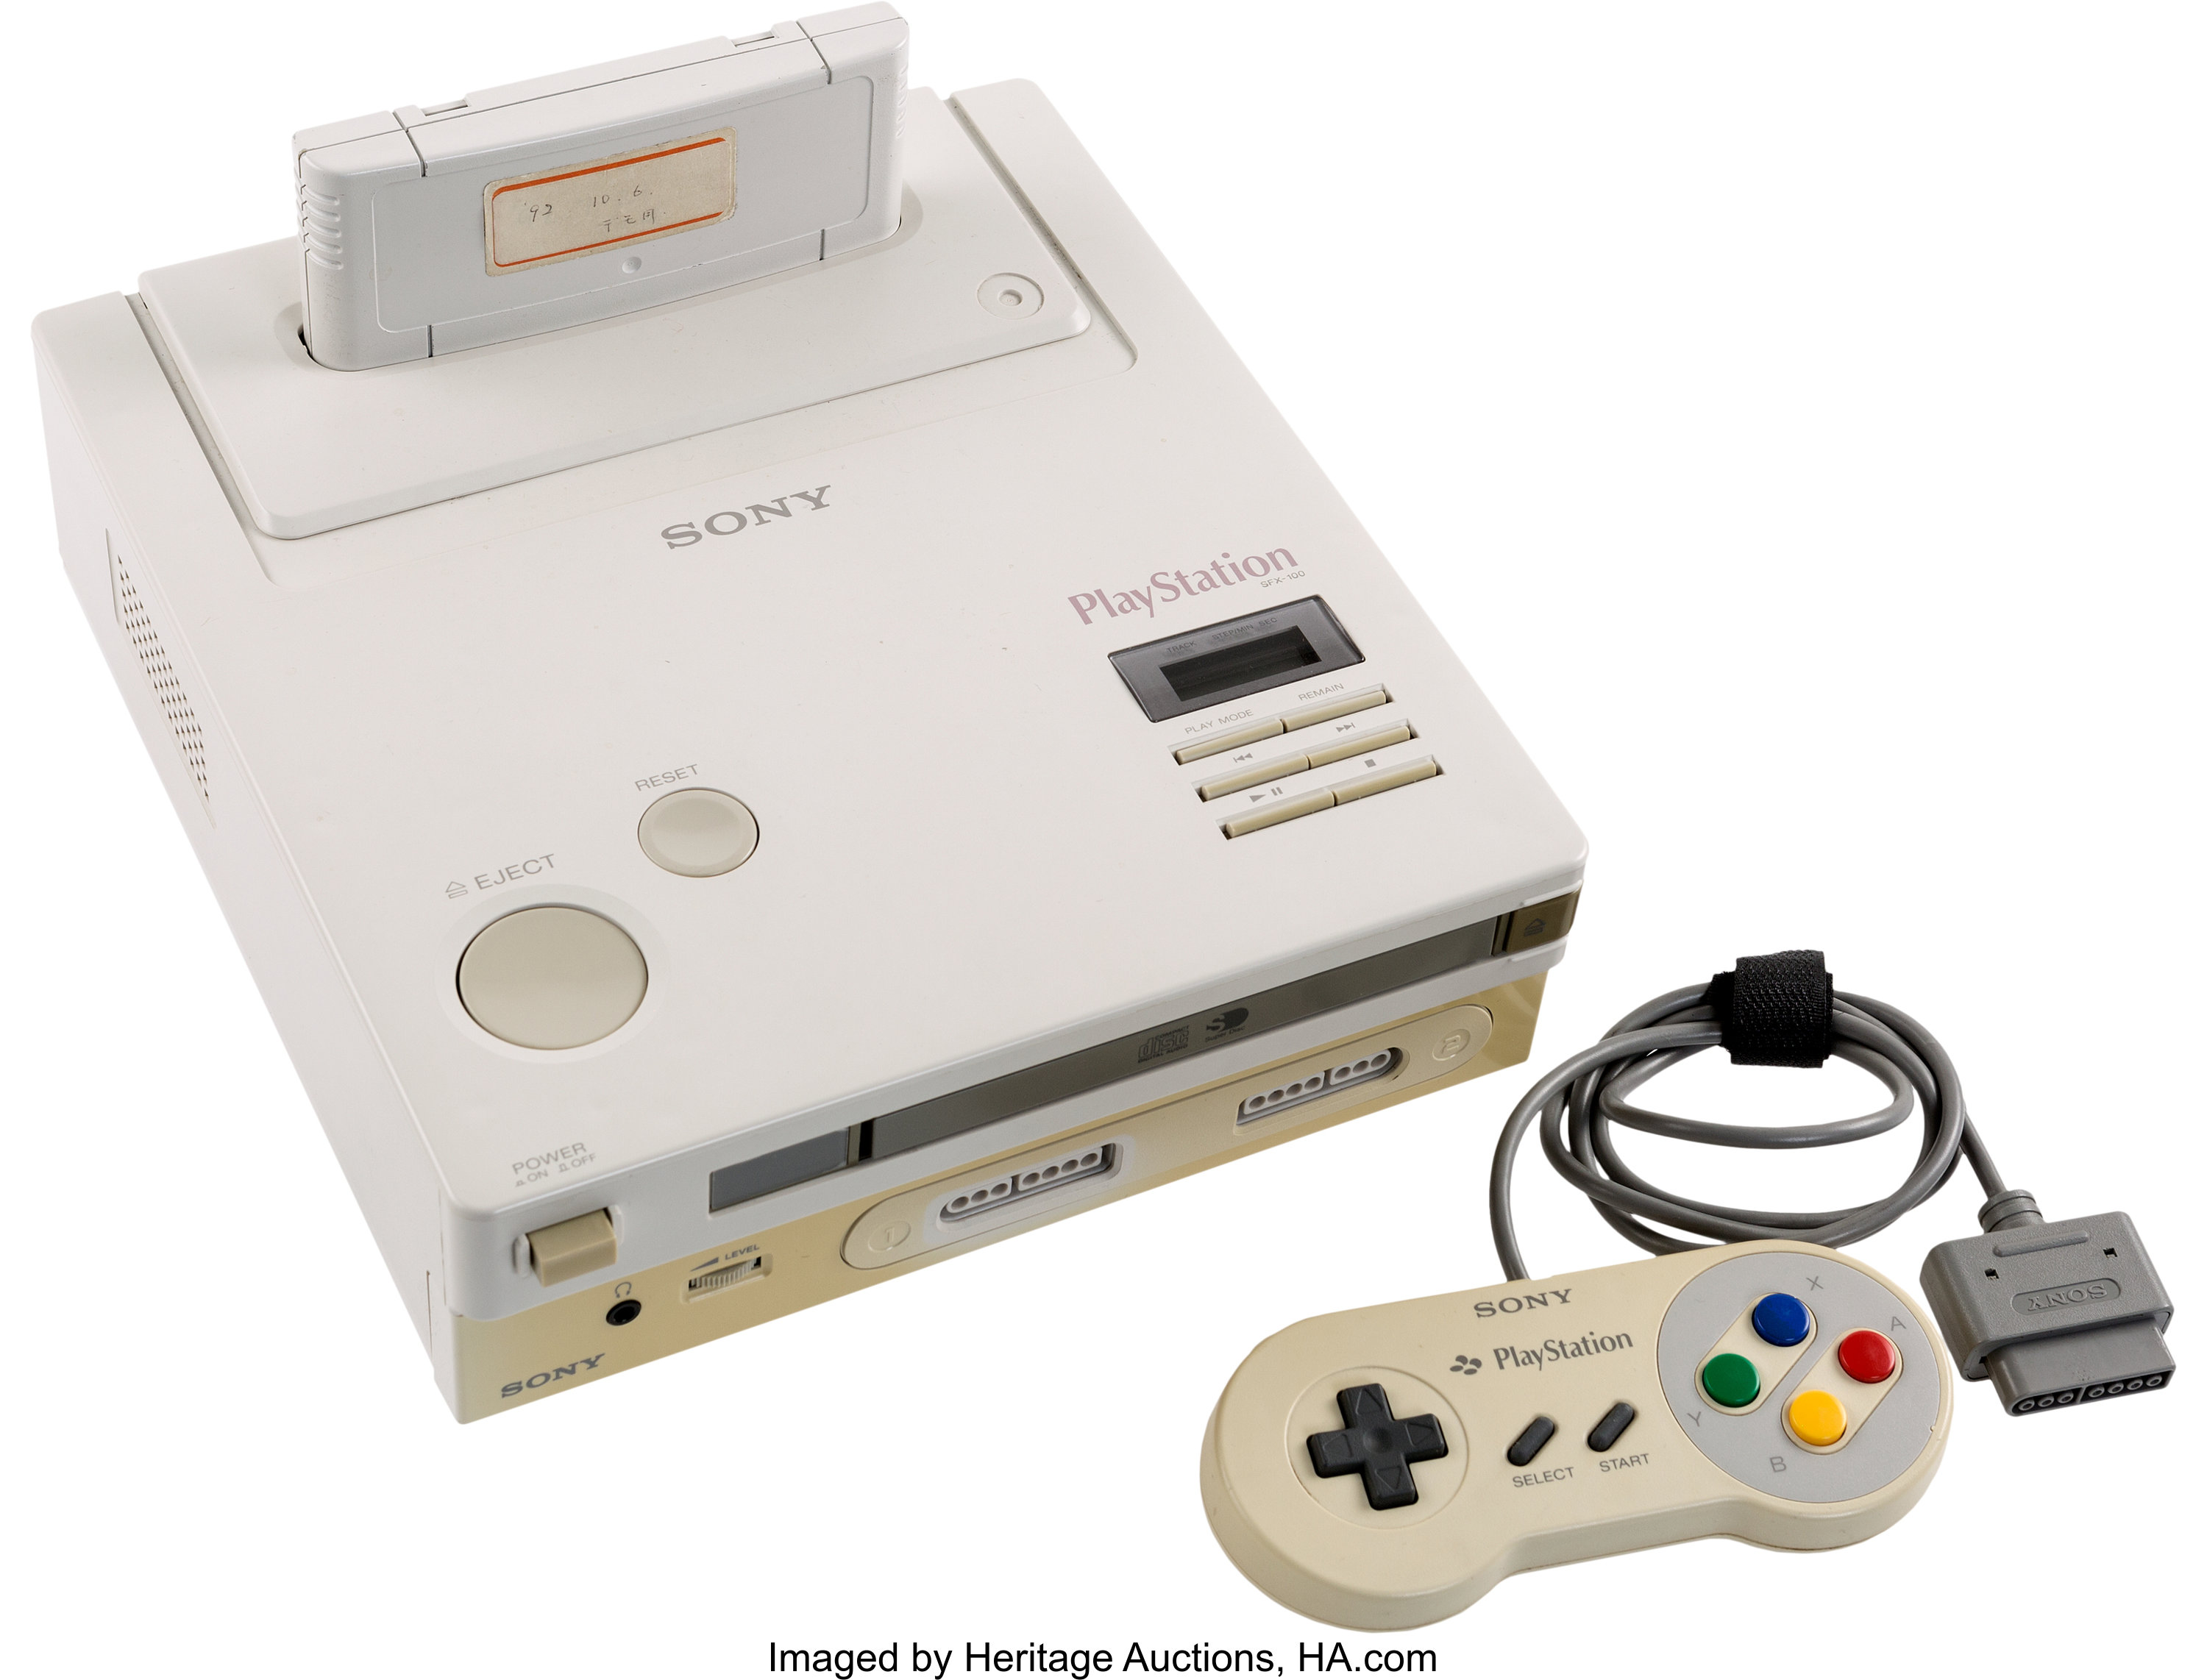 Original Playstation System Console